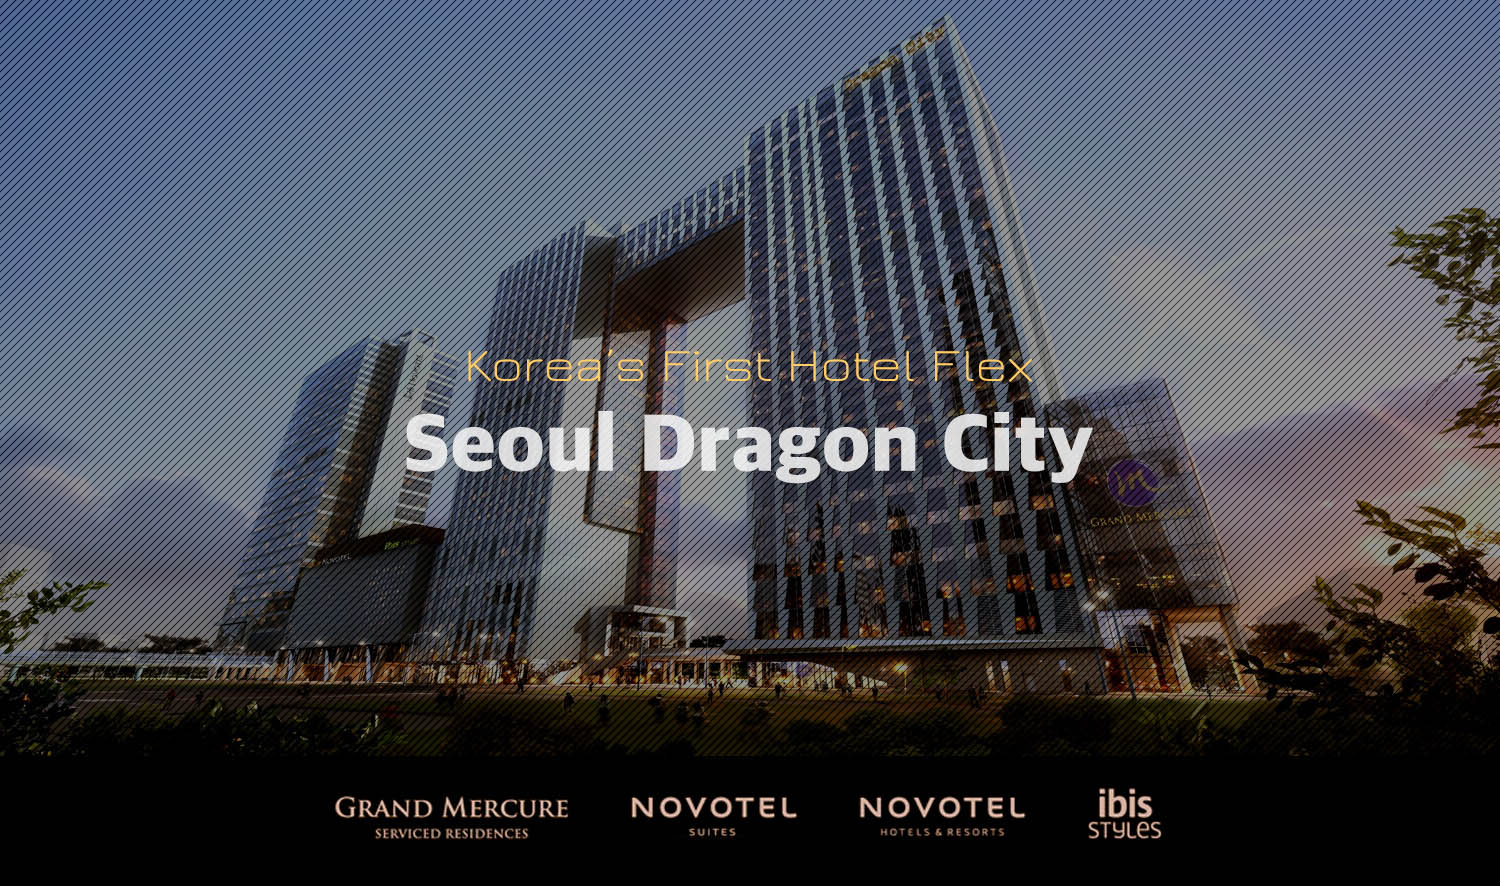 Seoul Dragon City Novotel Suites, Seoul, South Korea